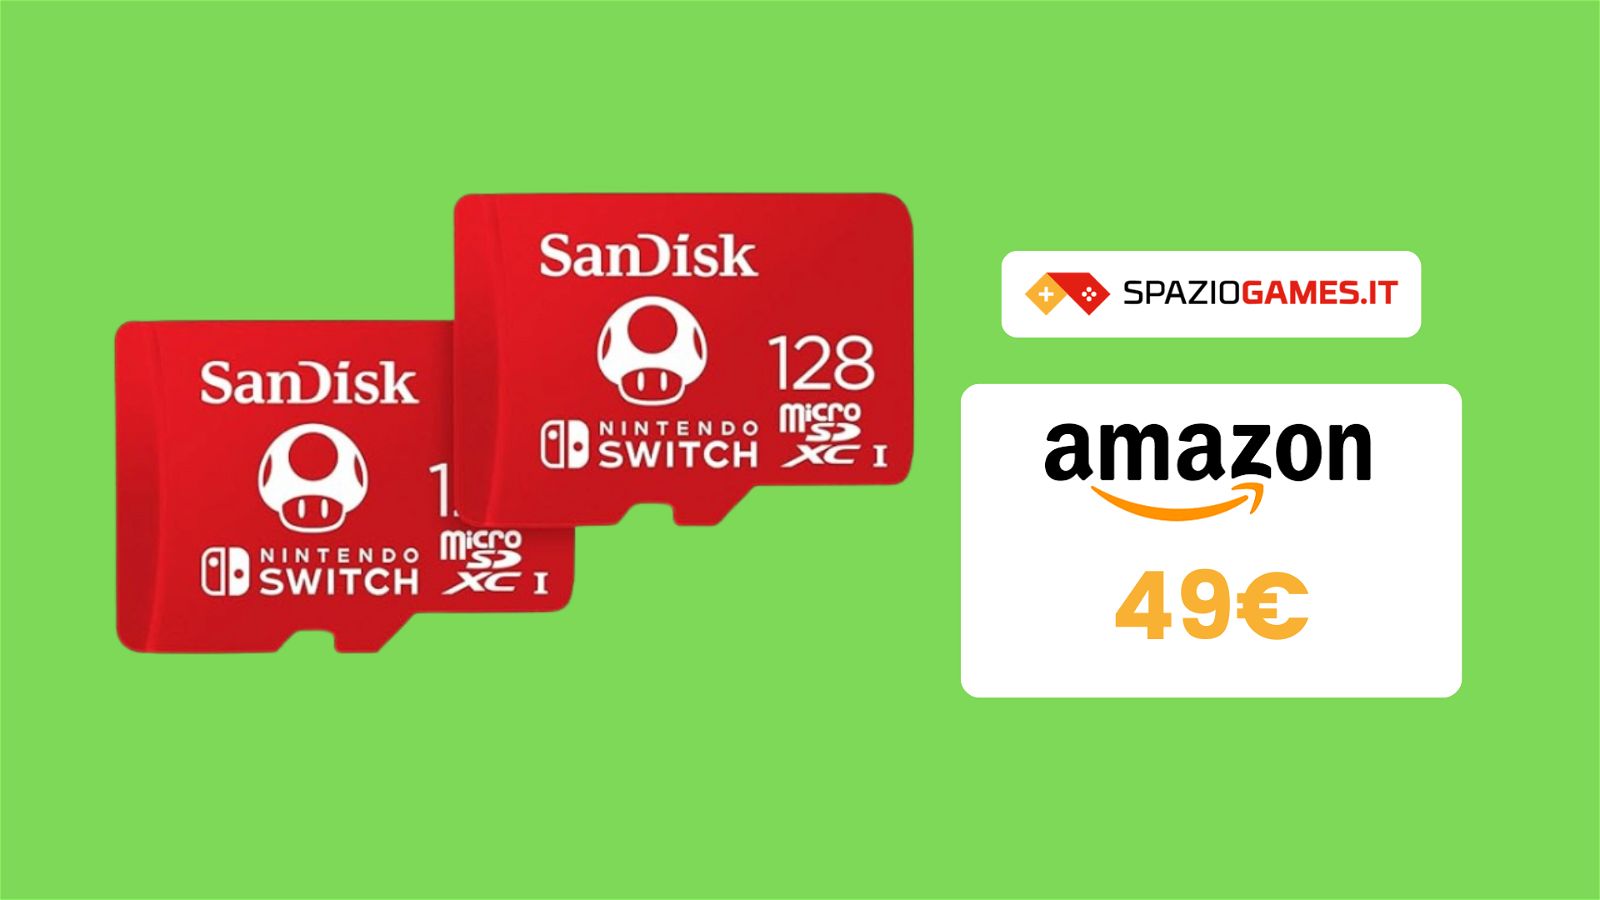 2 microSDXC SanDisk da 128 GB per Nintendo Switch a 49€!